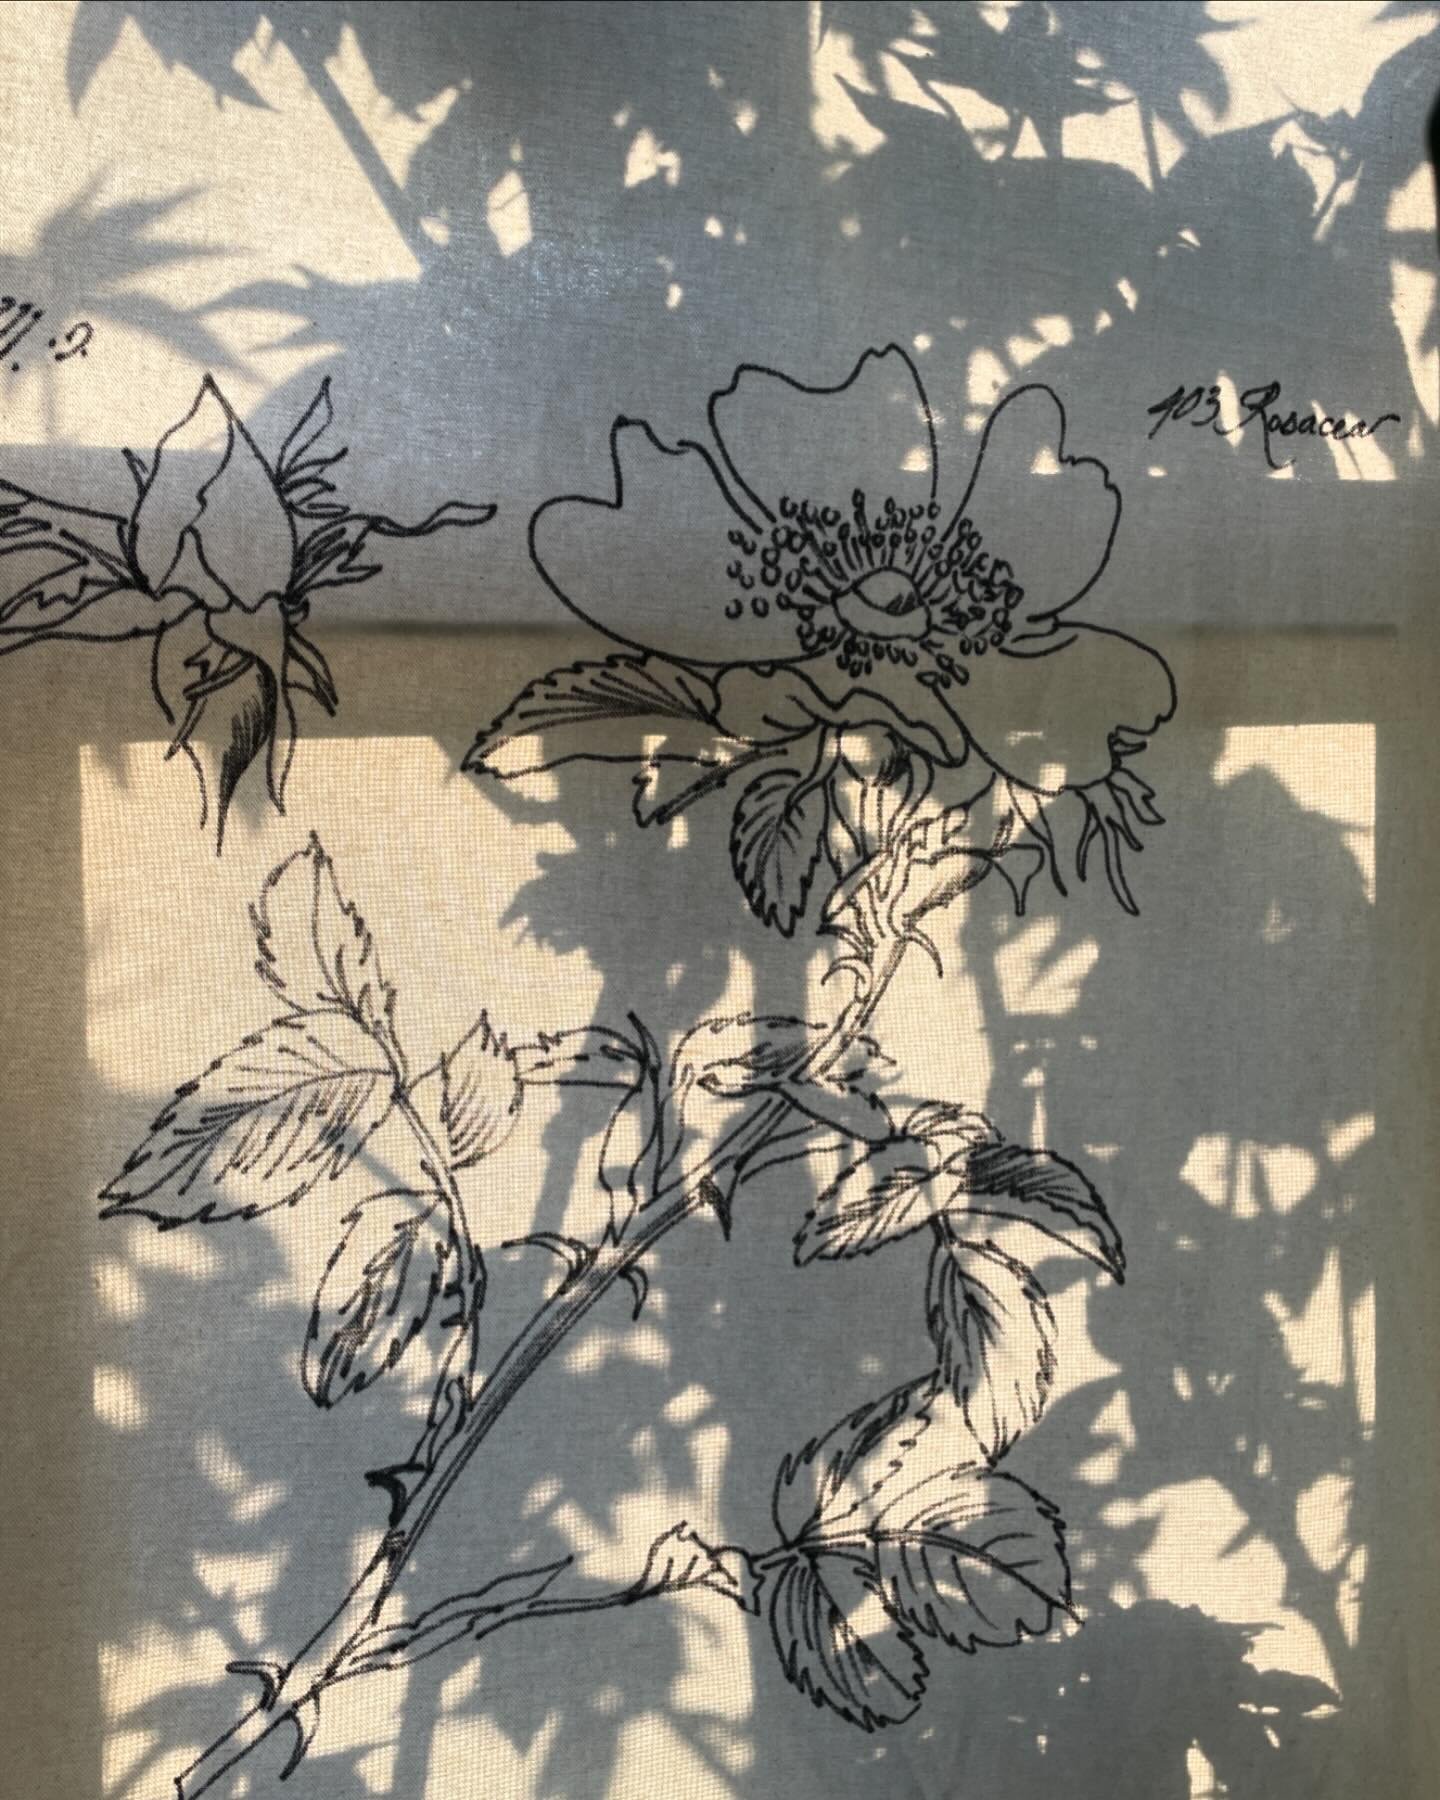 An ahhhhhh moment as the morning sun plays through the dining room window. 

#morningsun
#botanicalart
#diywindowshades
#naturesartistry 
 #shadowsandlight